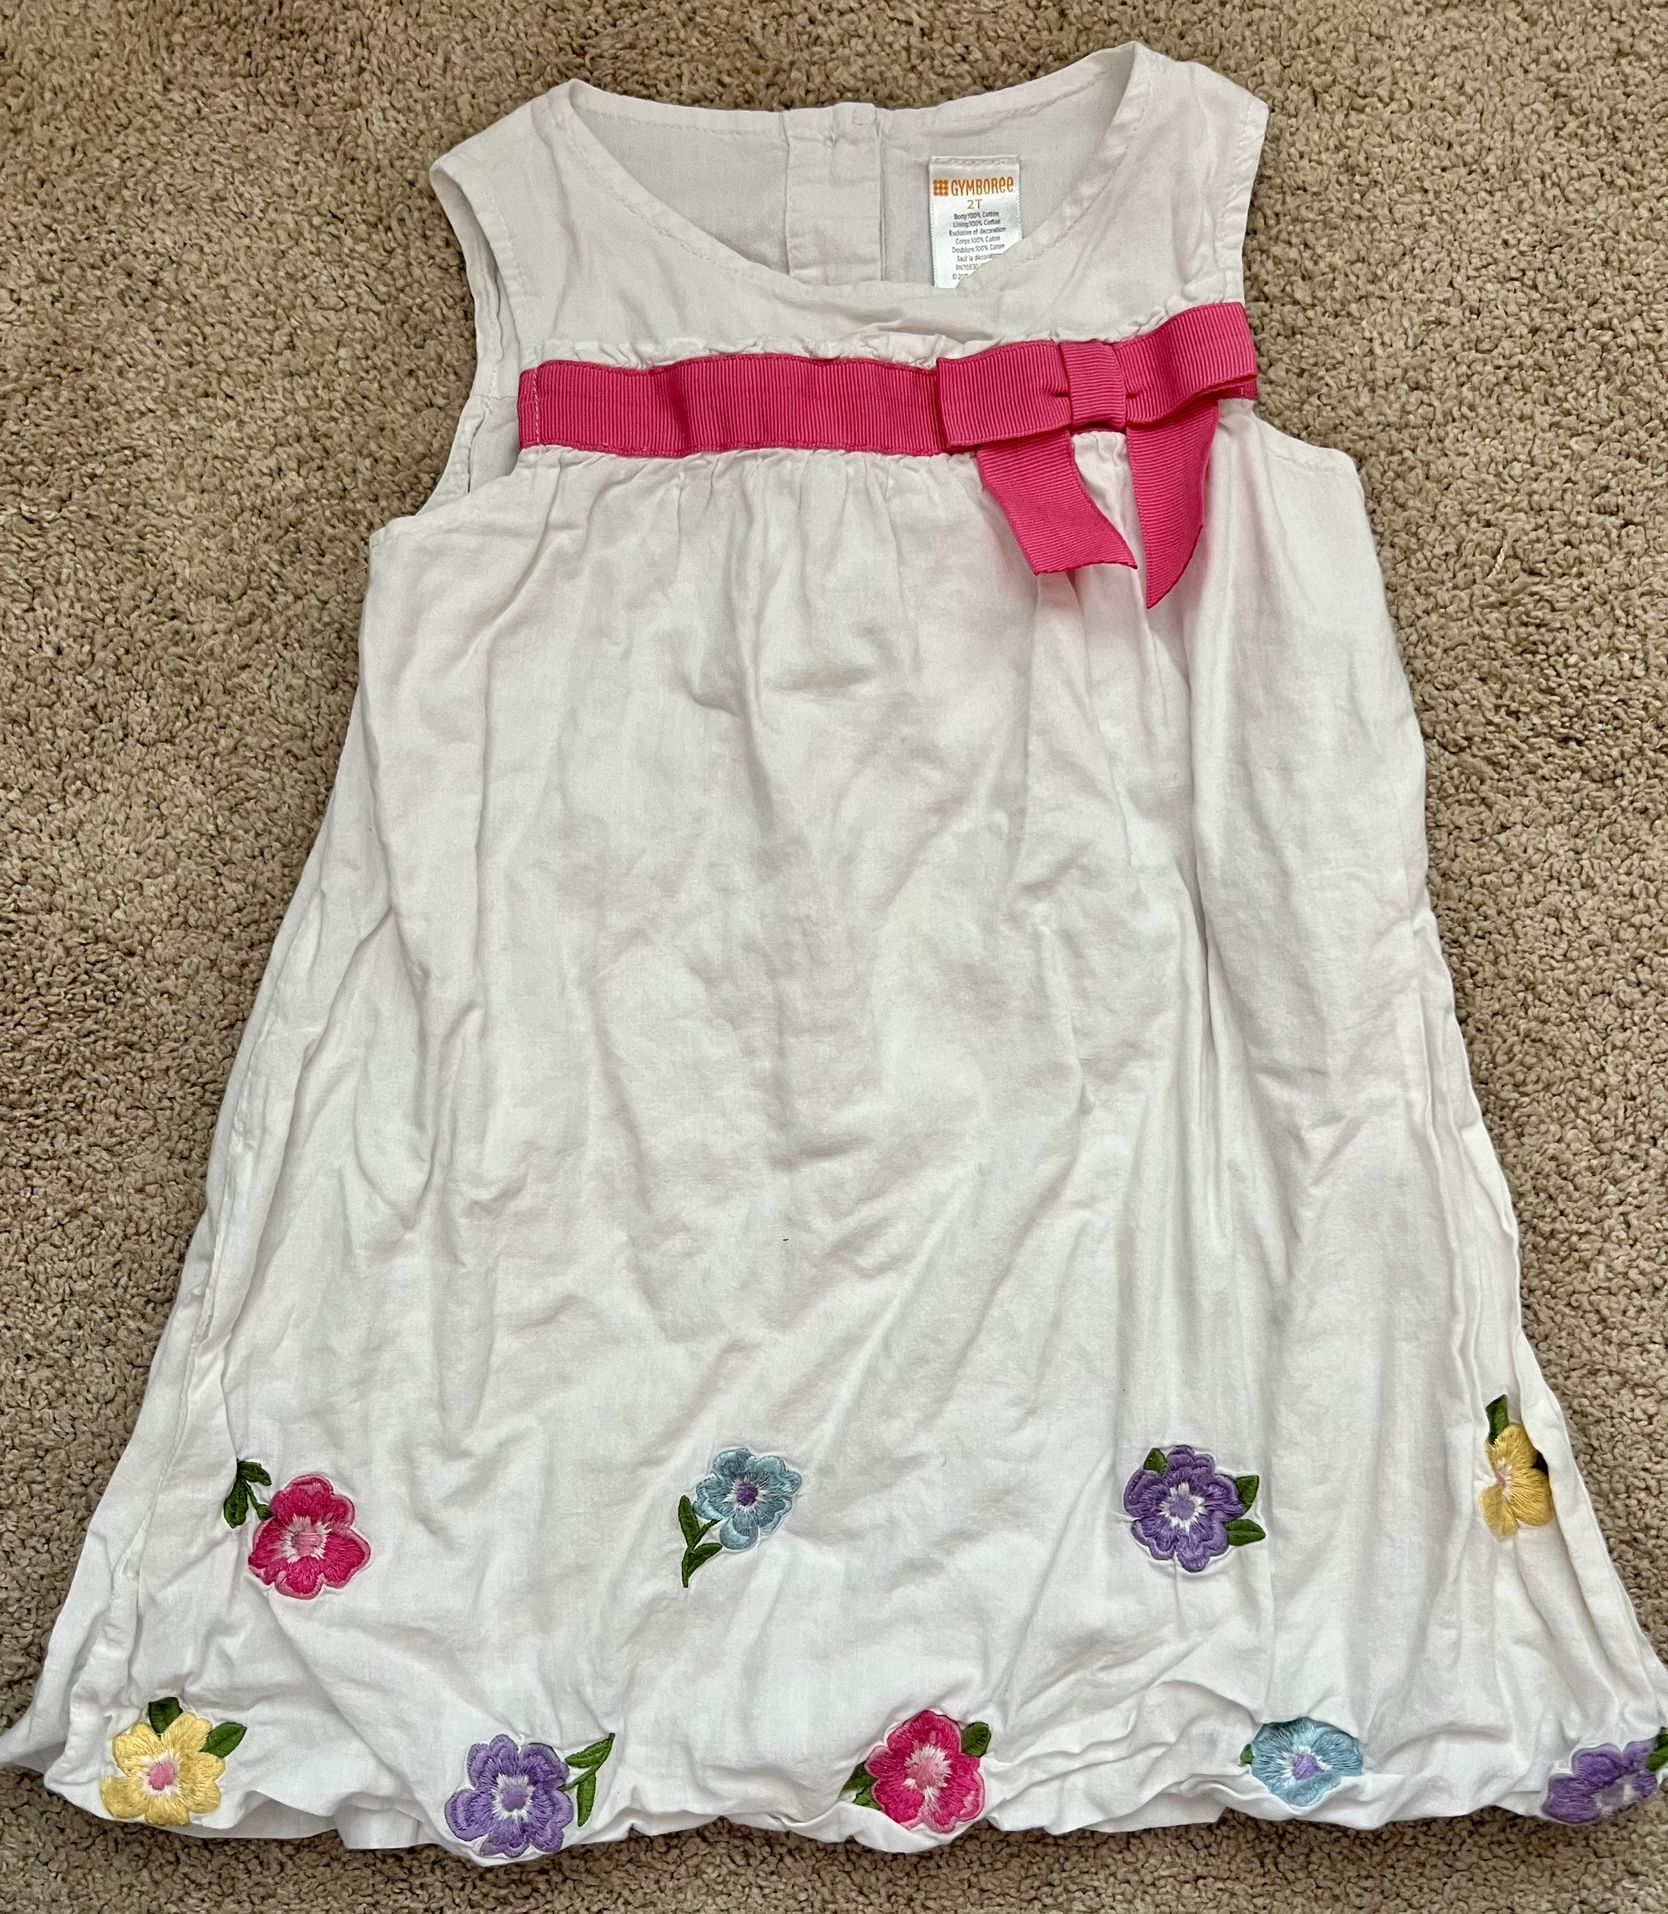 Gymboree toddler girl dress, size 2T